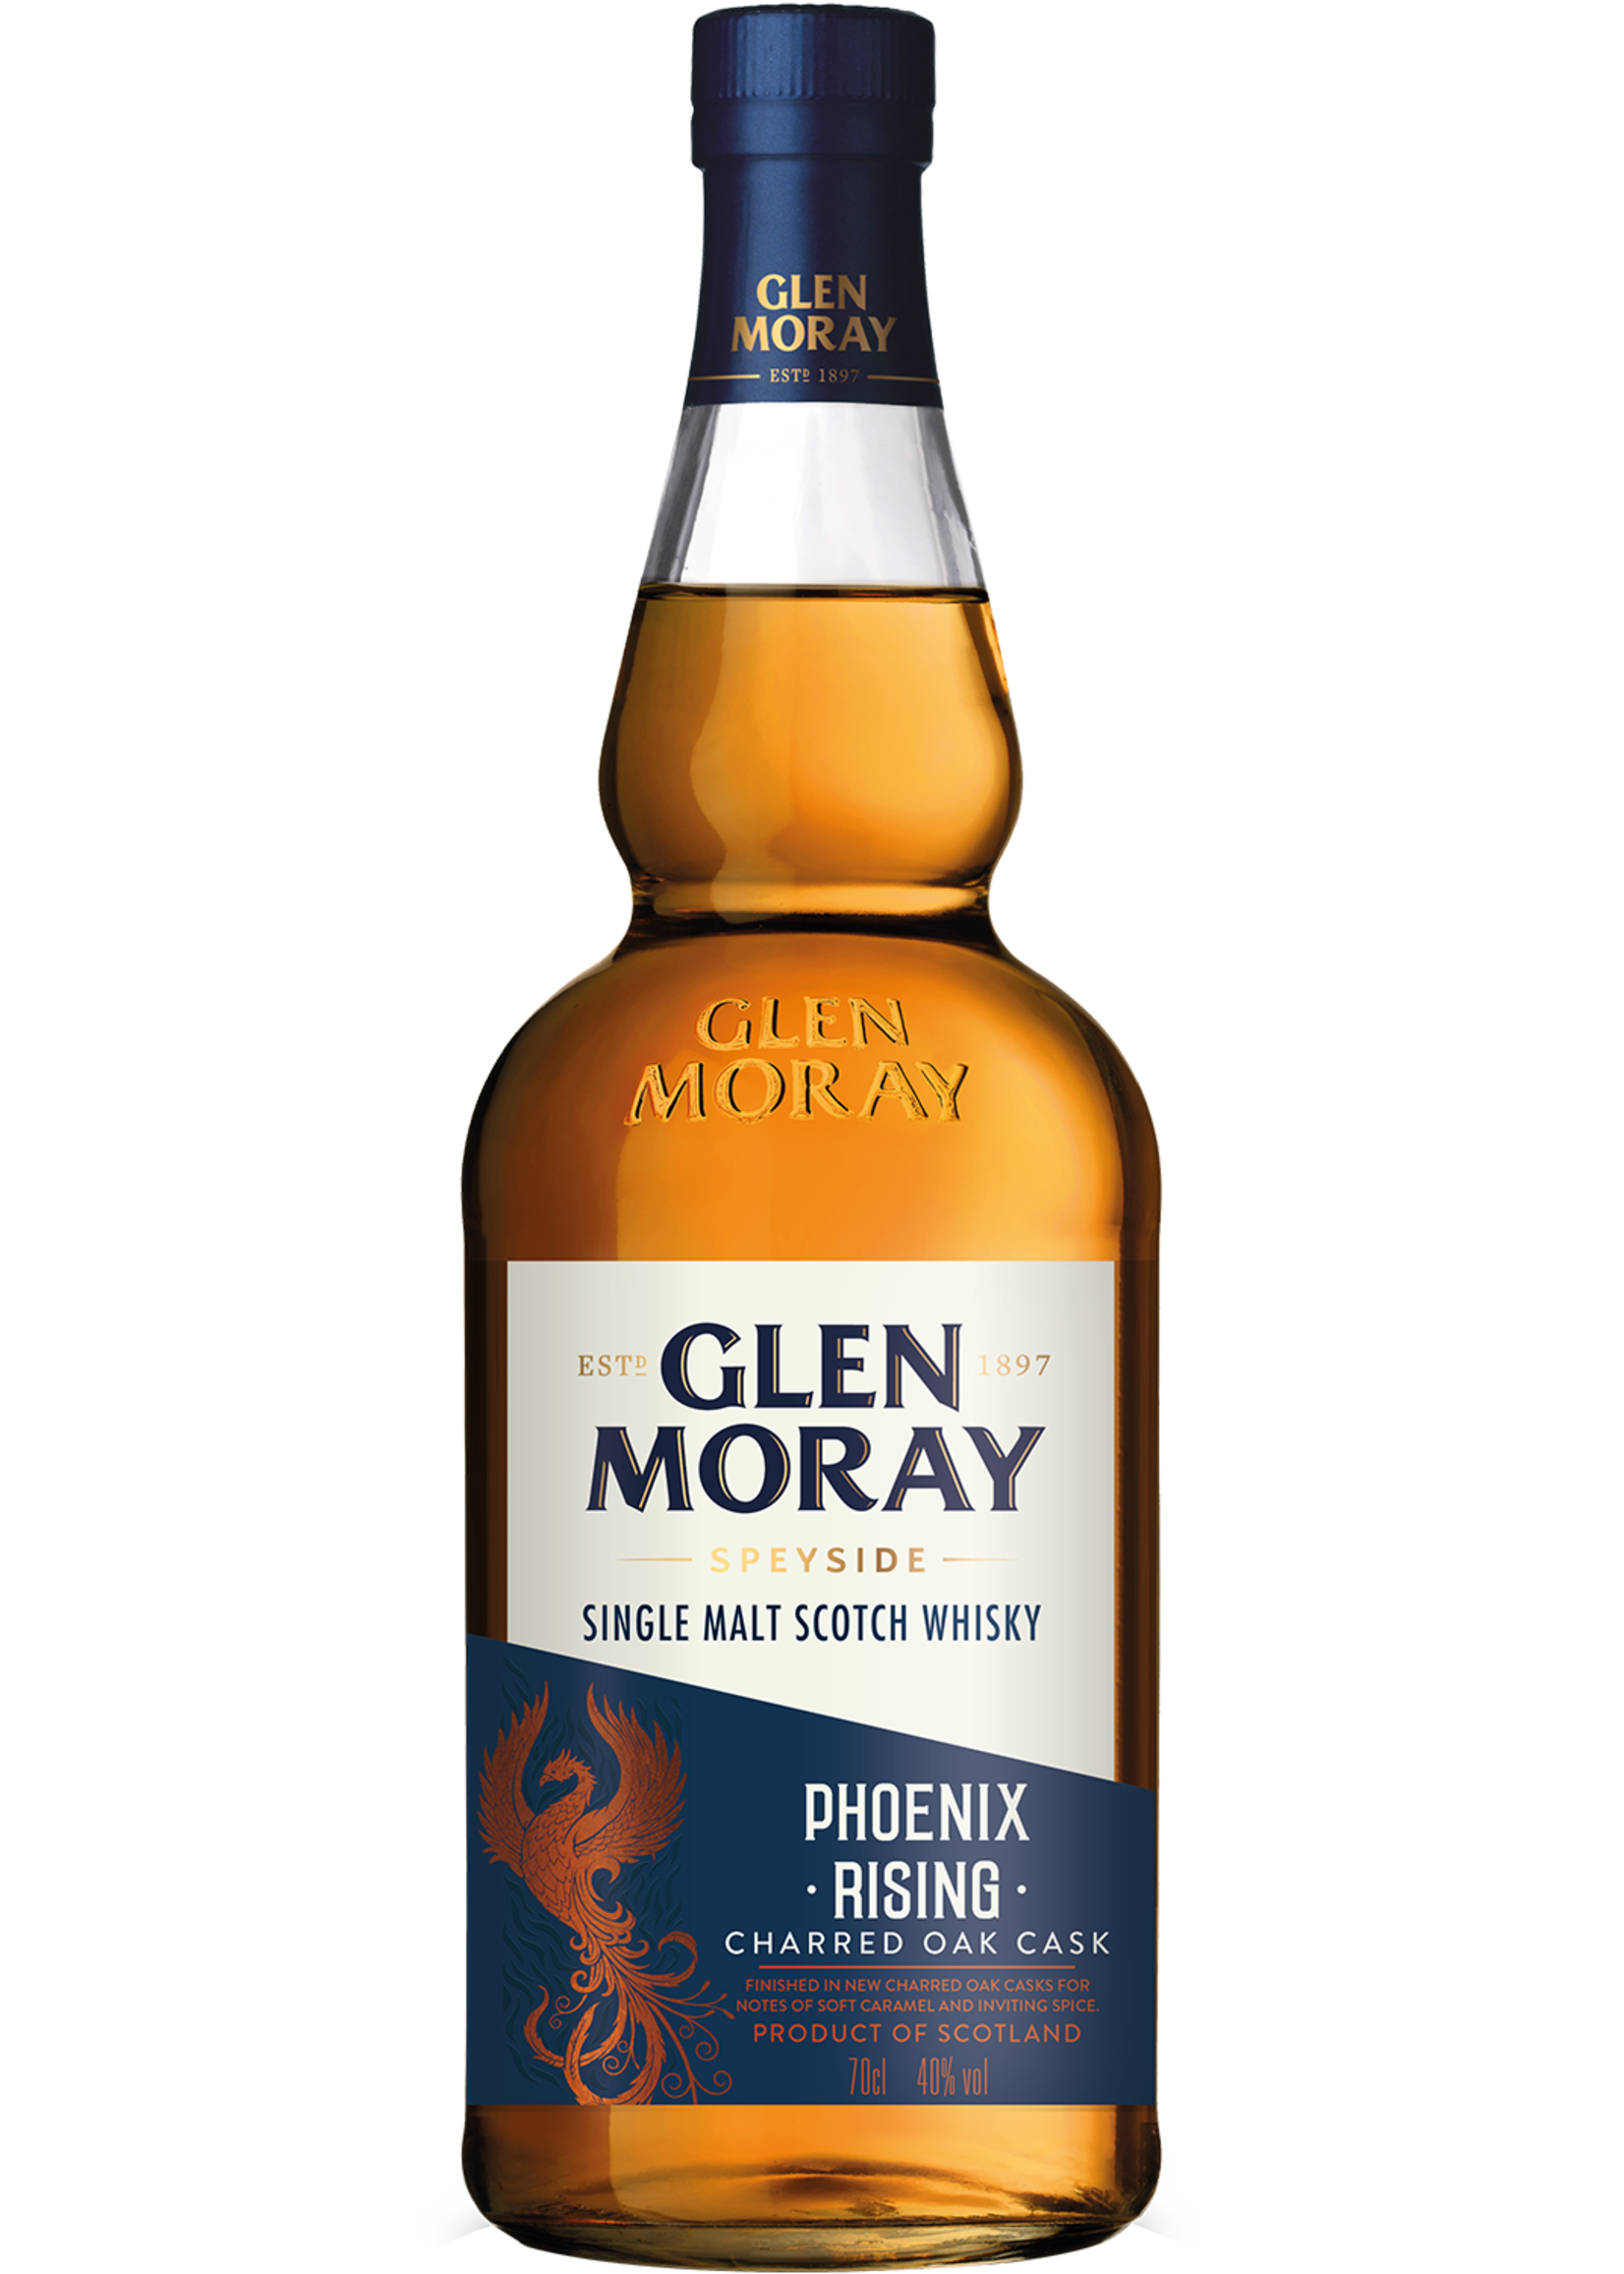 Glen Moray Glen Moray Phoenix Rising 70 cl